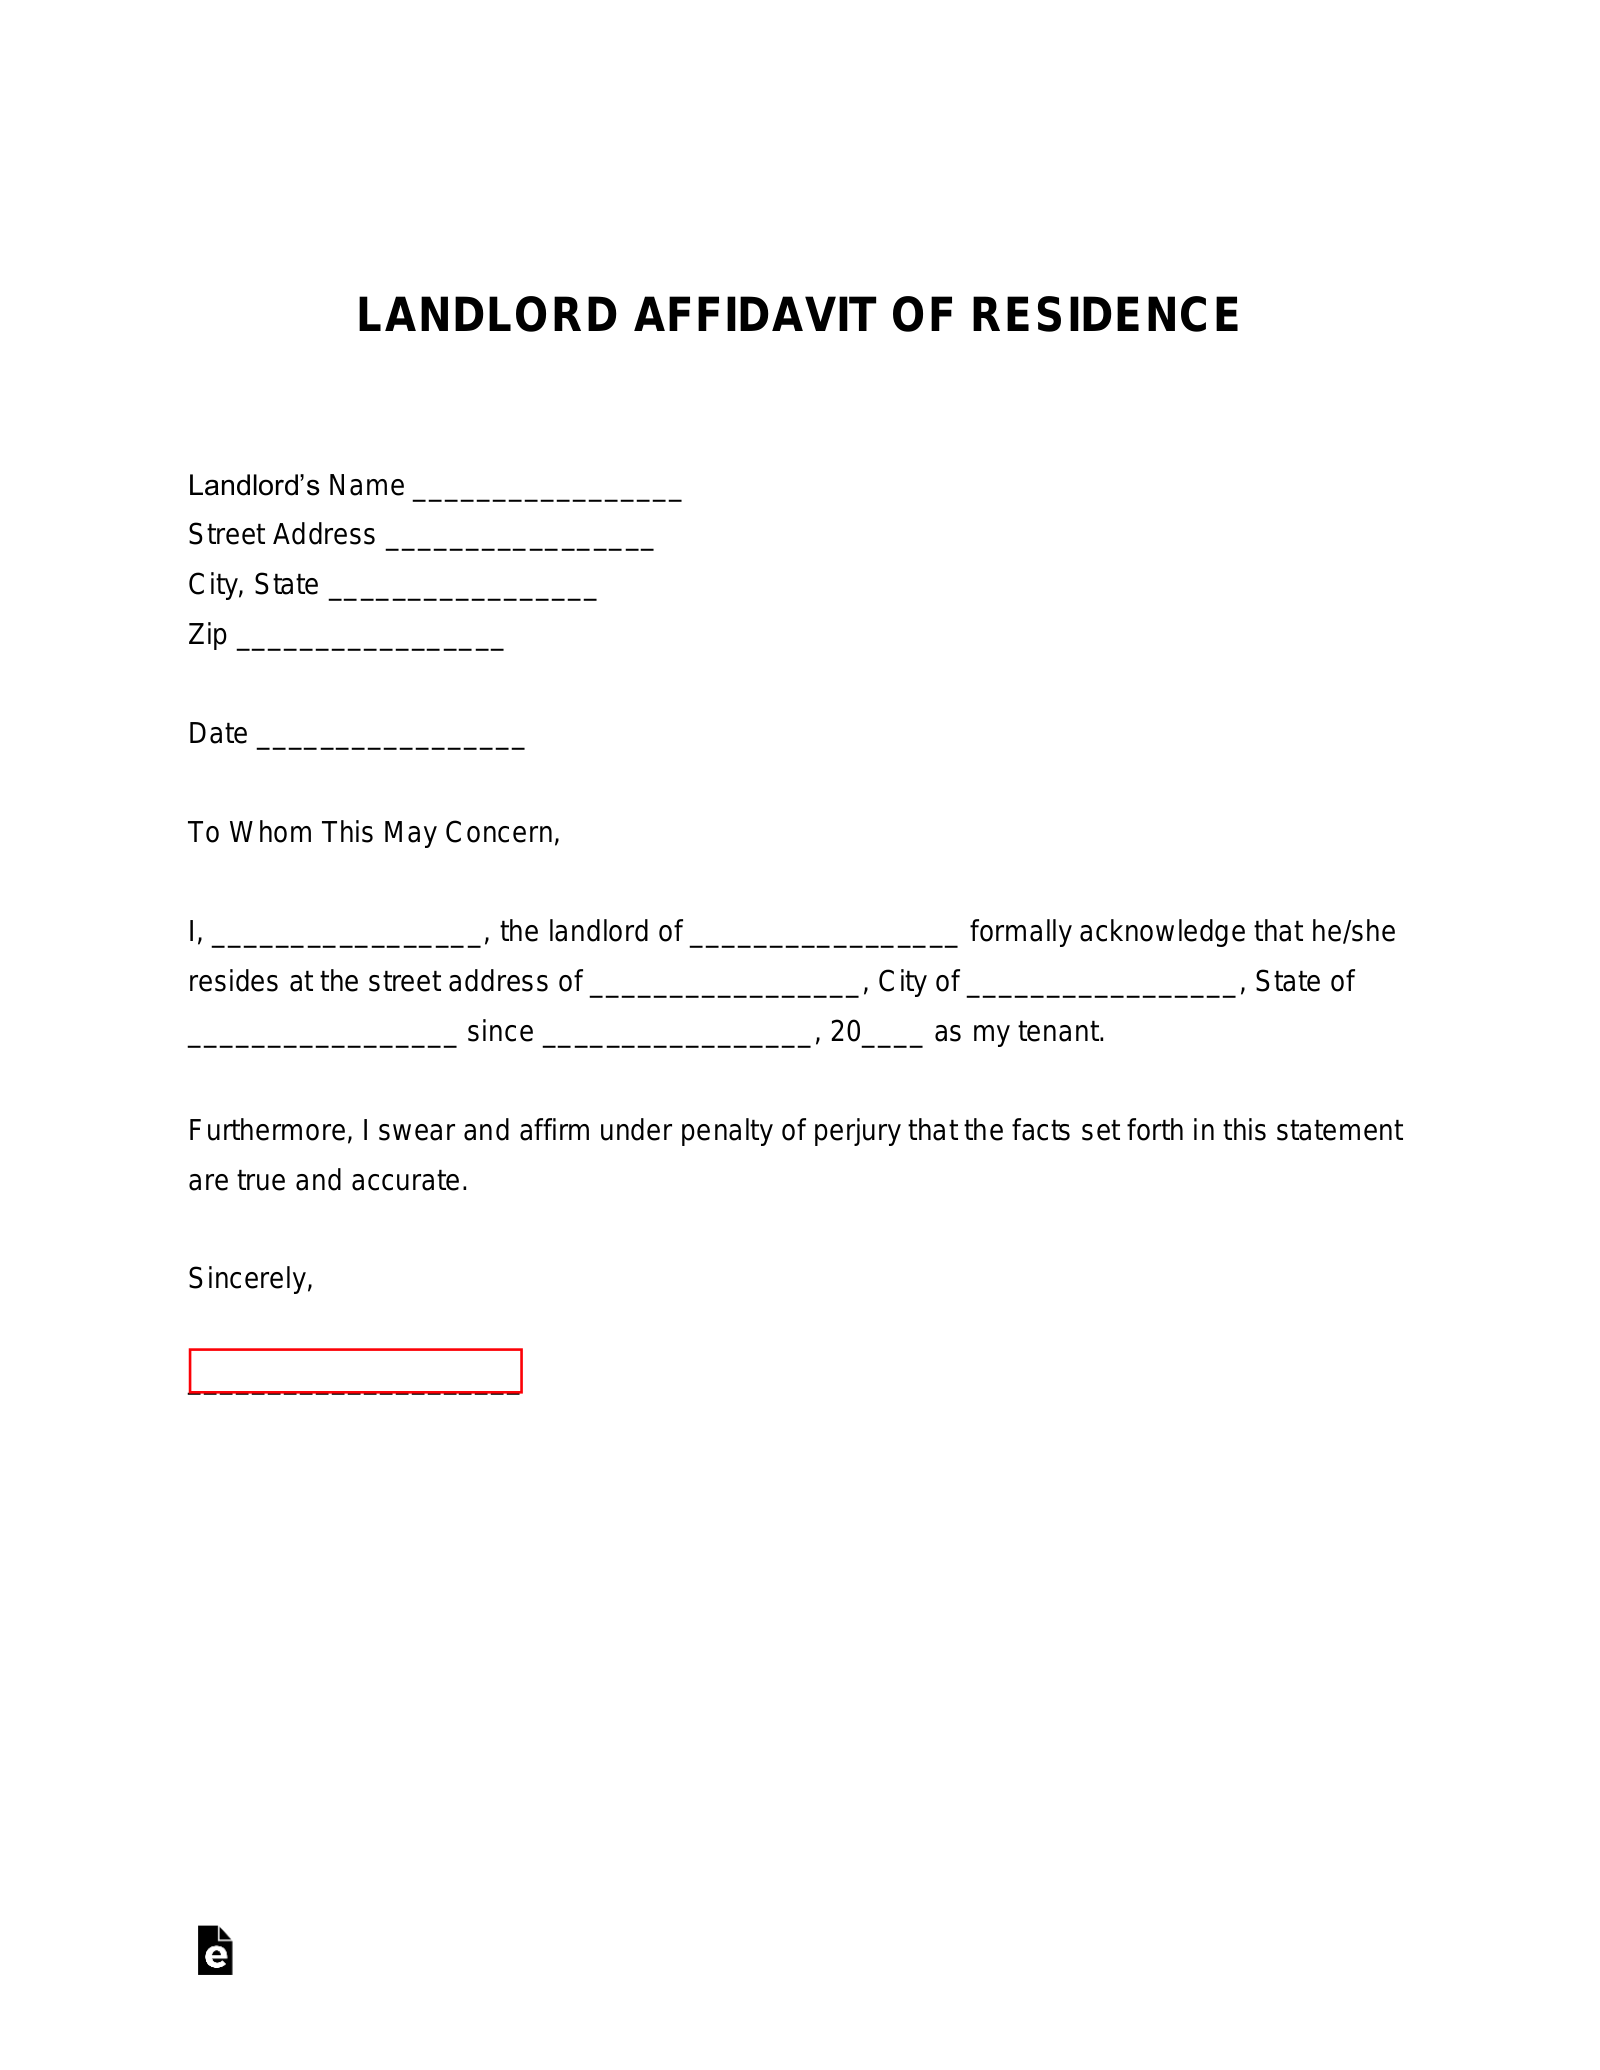 Landlord Verification Letter Sample from eforms.com